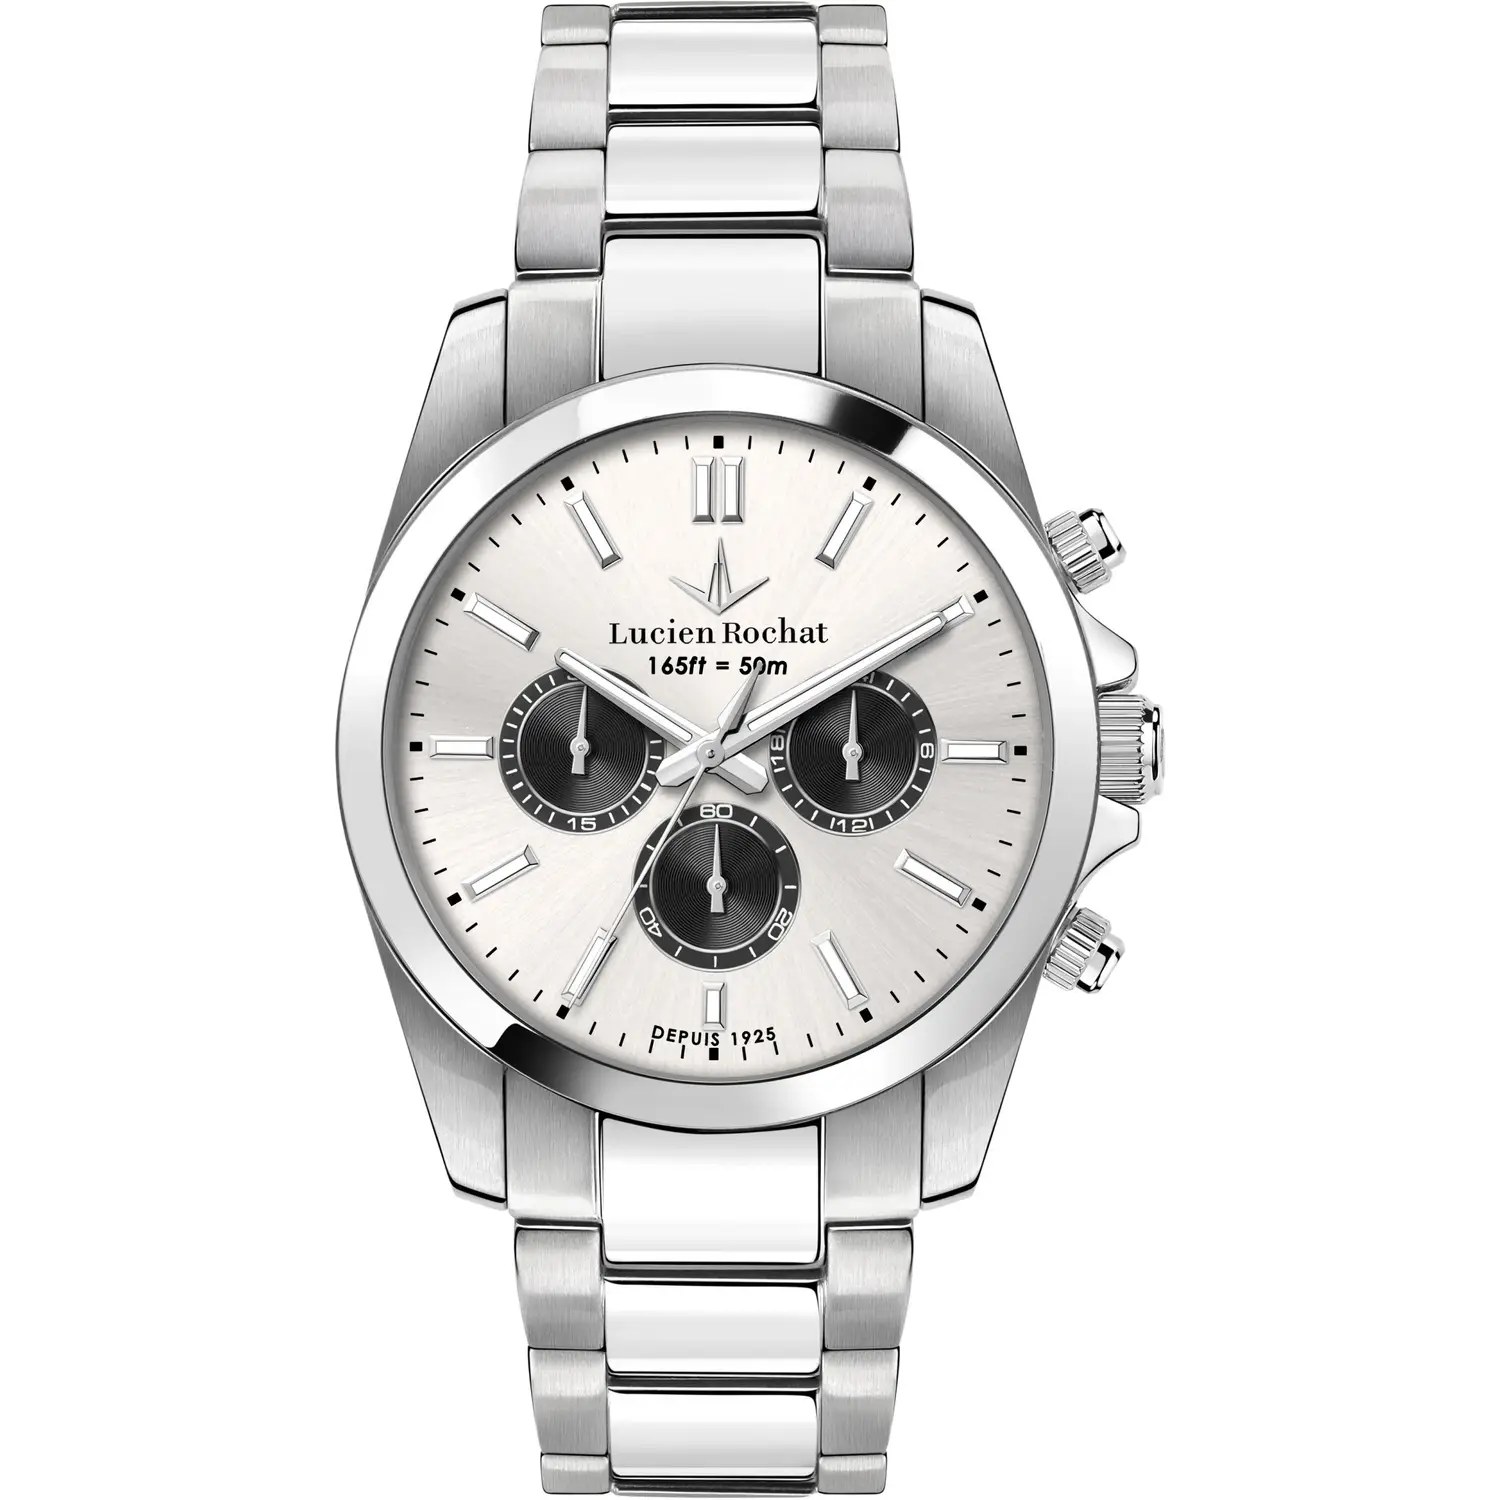 ساعت مچی لوسین روشا مدل R0473617004 - lucien rochat watch r0473617004  